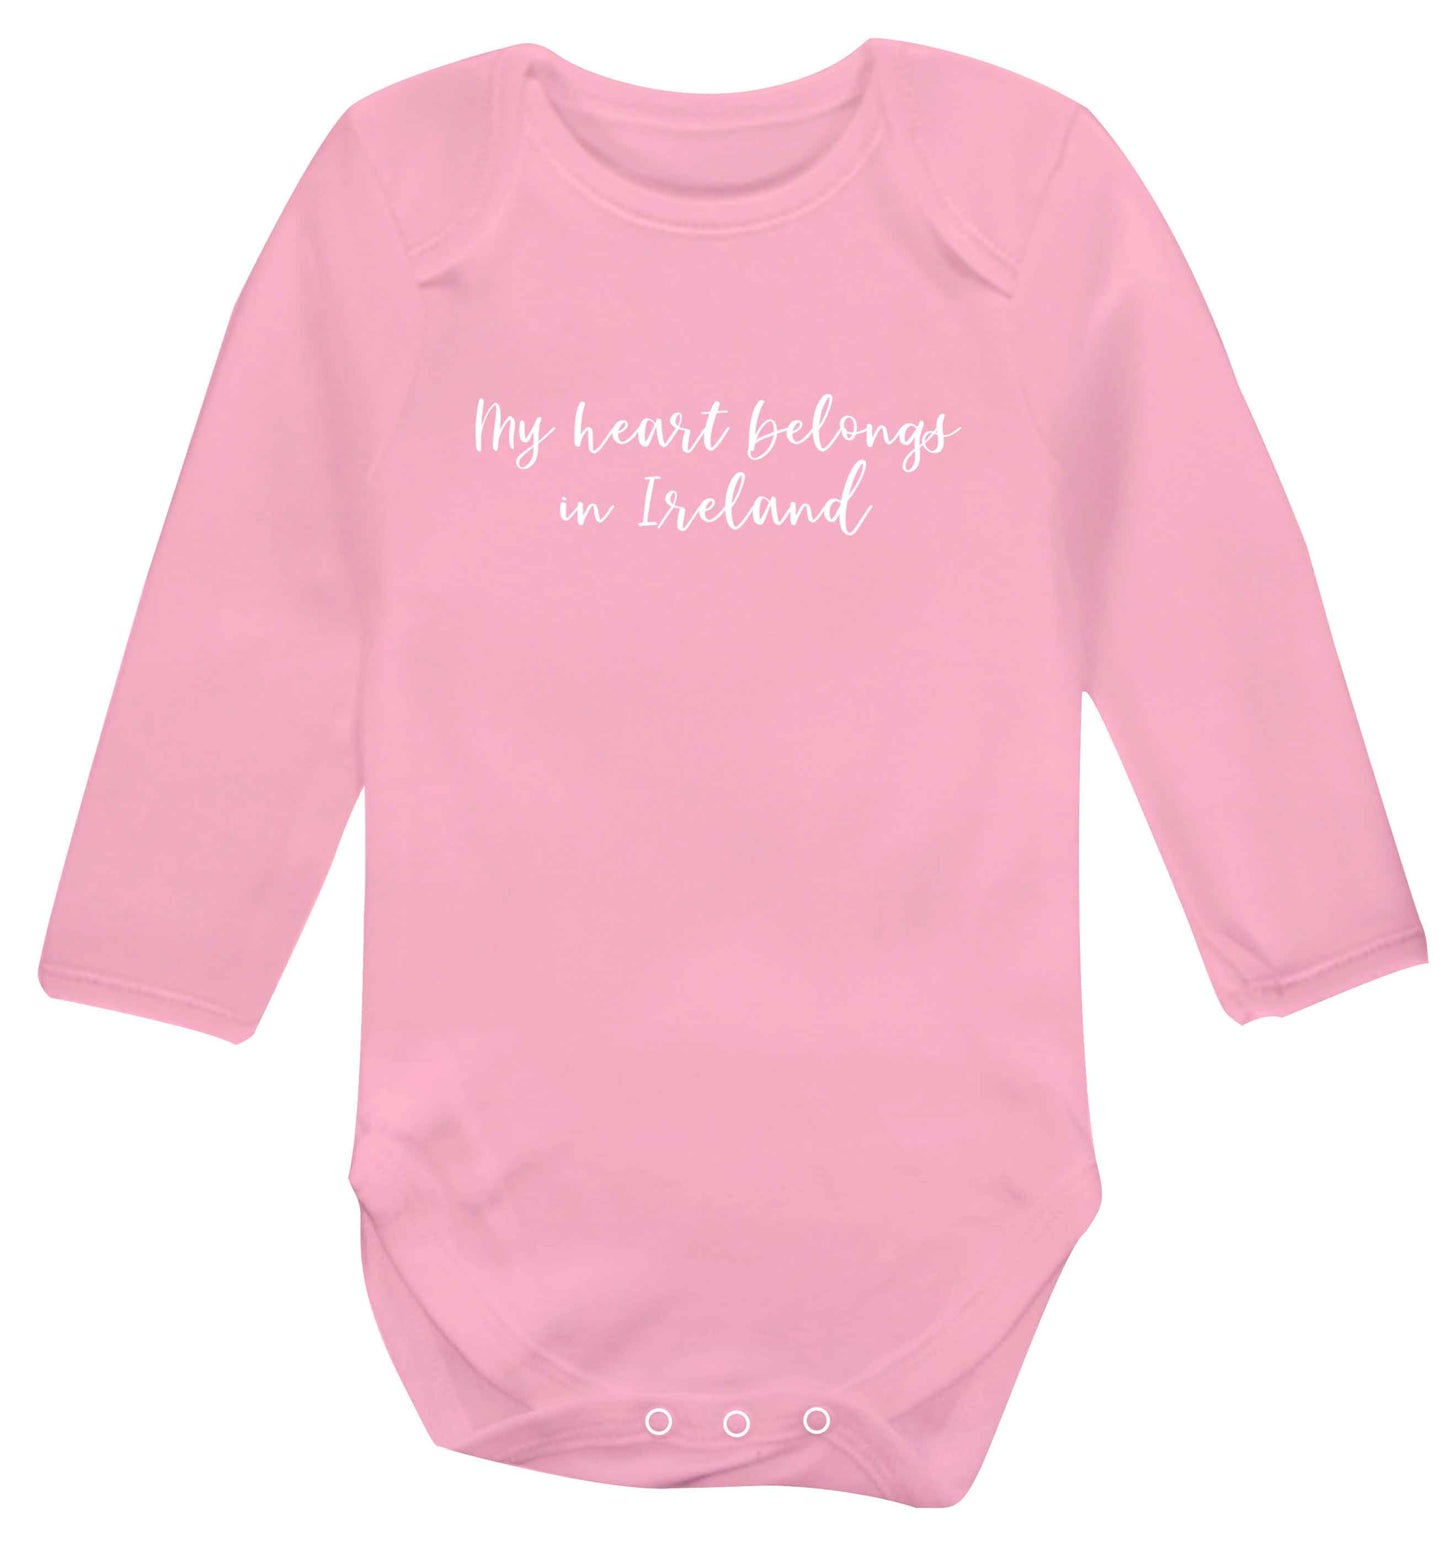 My heart belongs in Ireland baby vest long sleeved pale pink 6-12 months